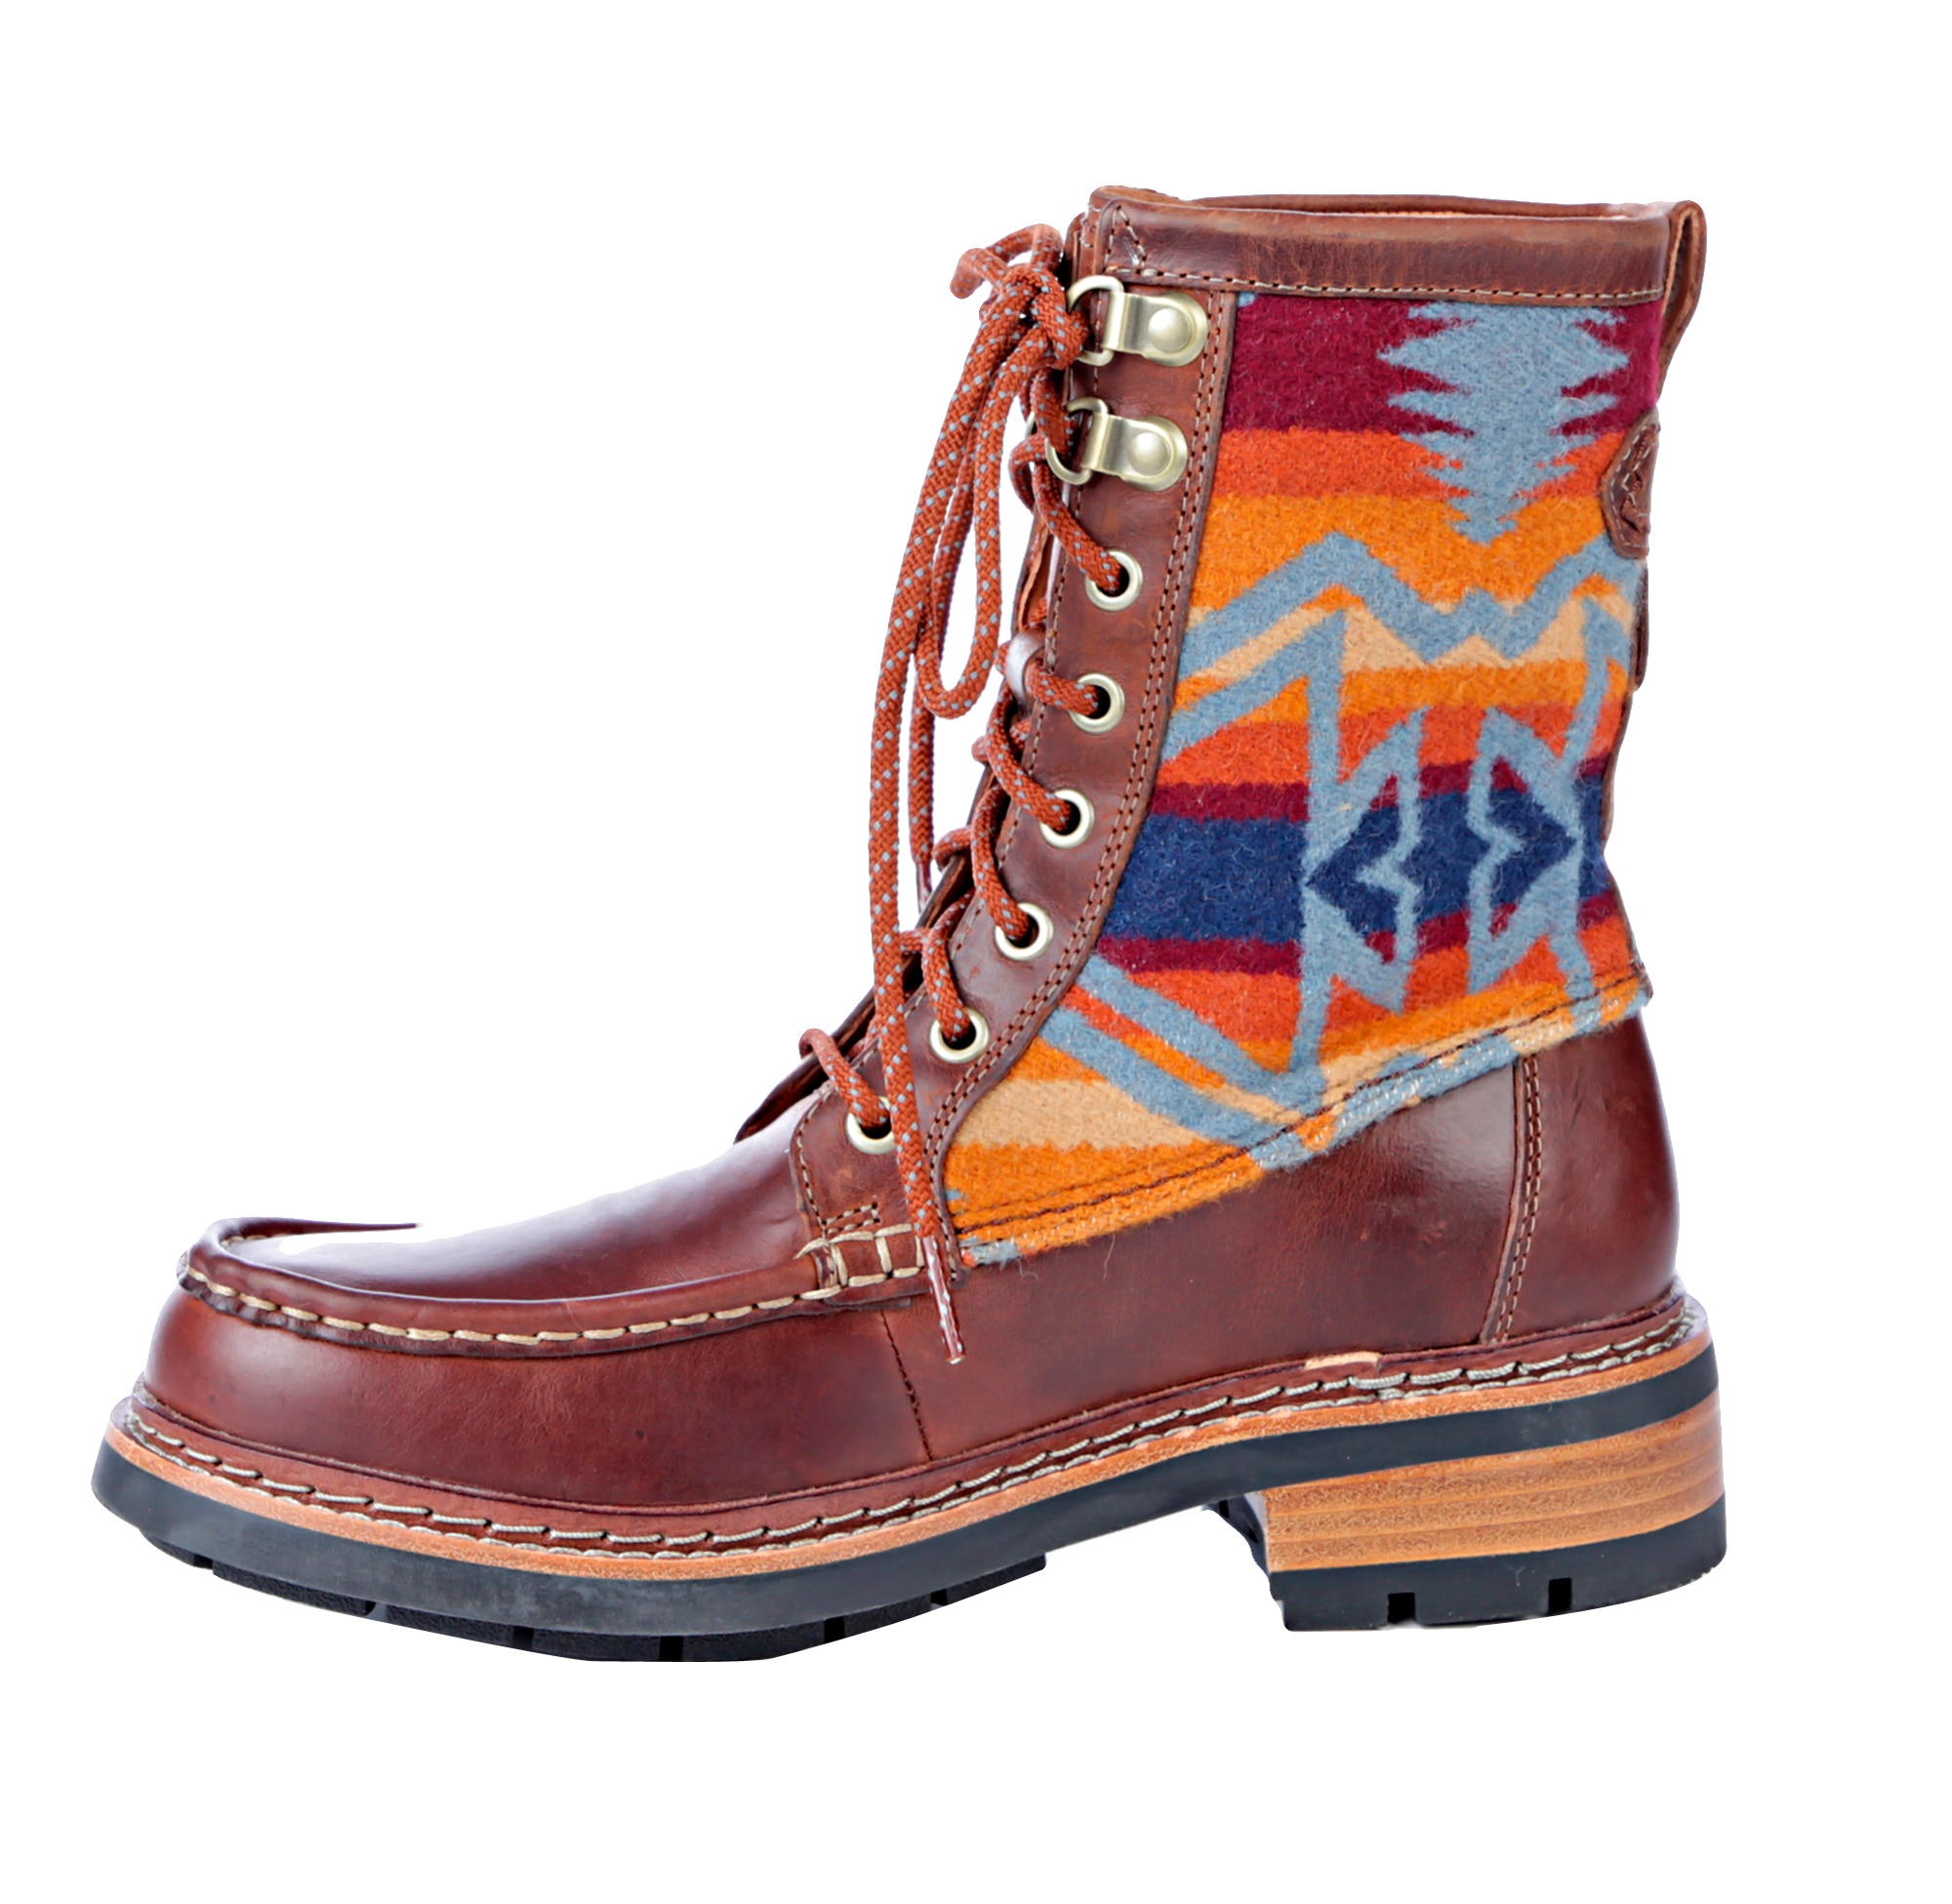 clarks ottawa boots